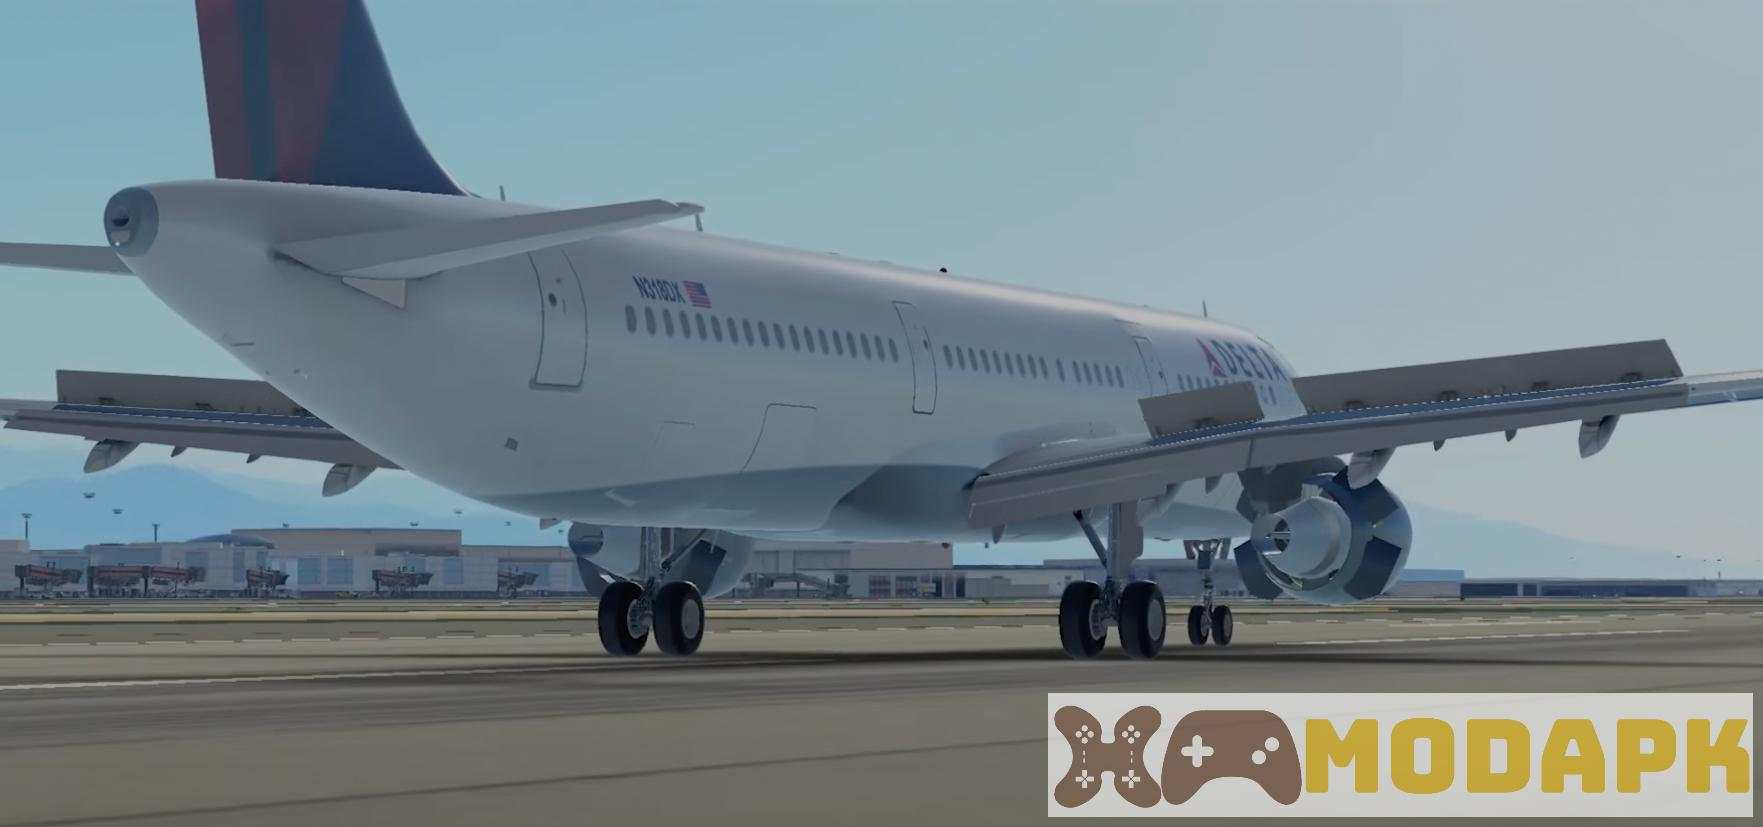 Infinite Flight Simulator APK MOD (Infinite Money, All Planes) 24.2.2